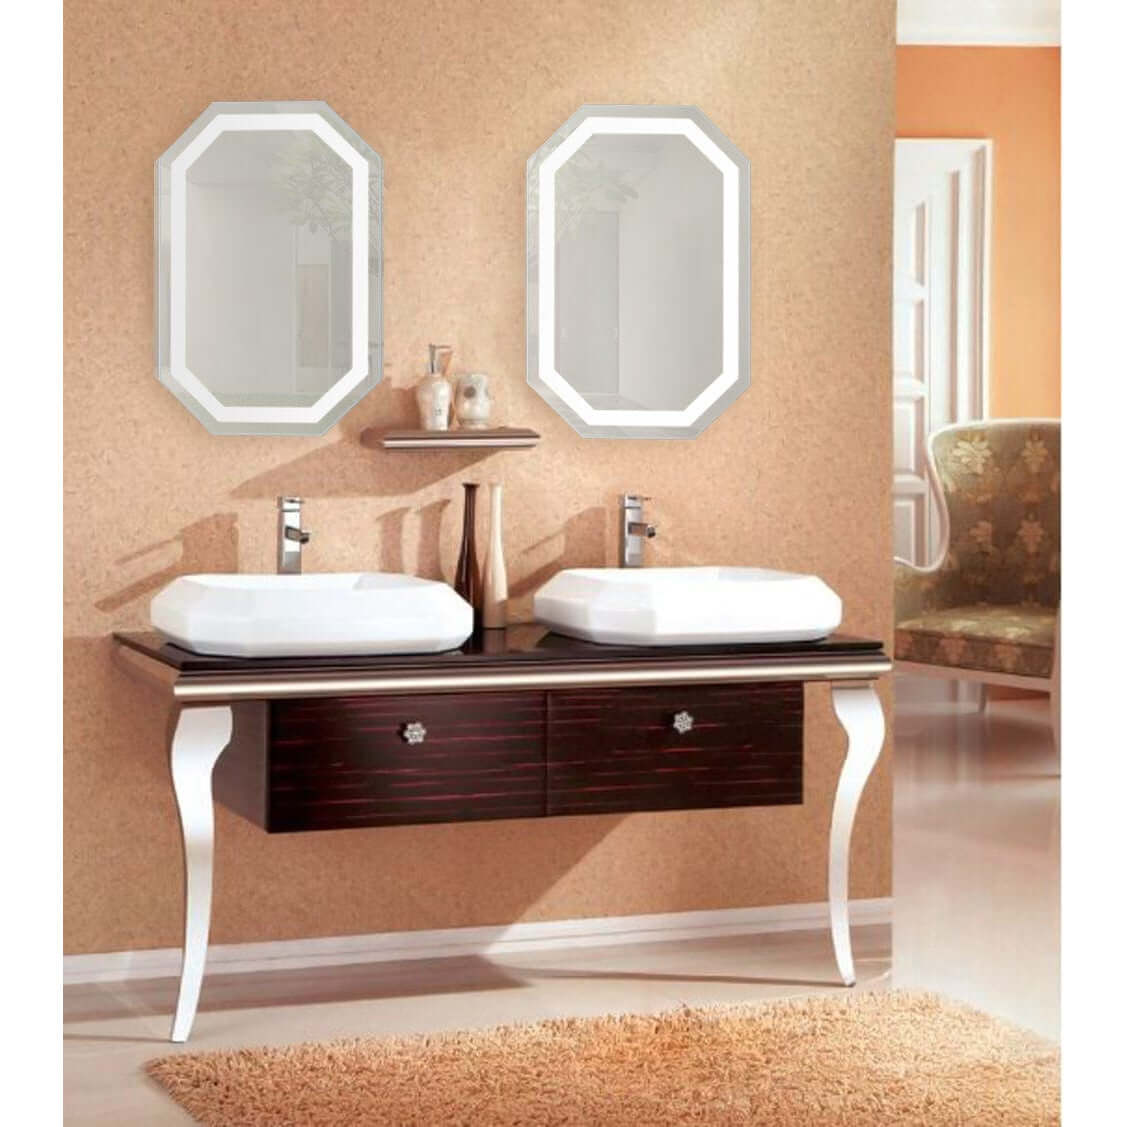 Lighted Bathroom Mirror - Krugg Tudor LED - TUDOR2030